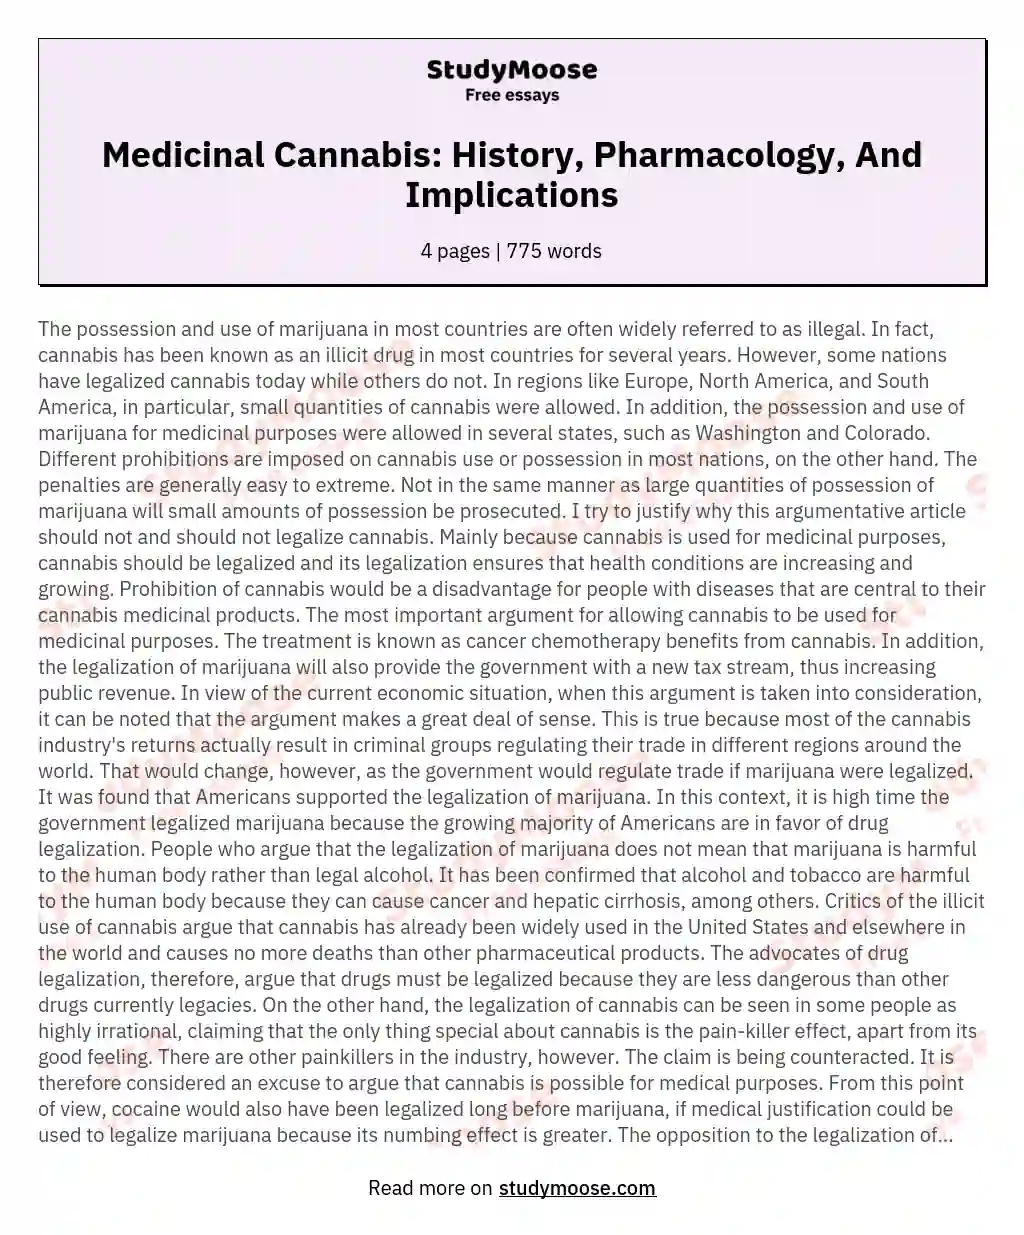 Medicinal Cannabis: History, Pharmacology, And Implications essay